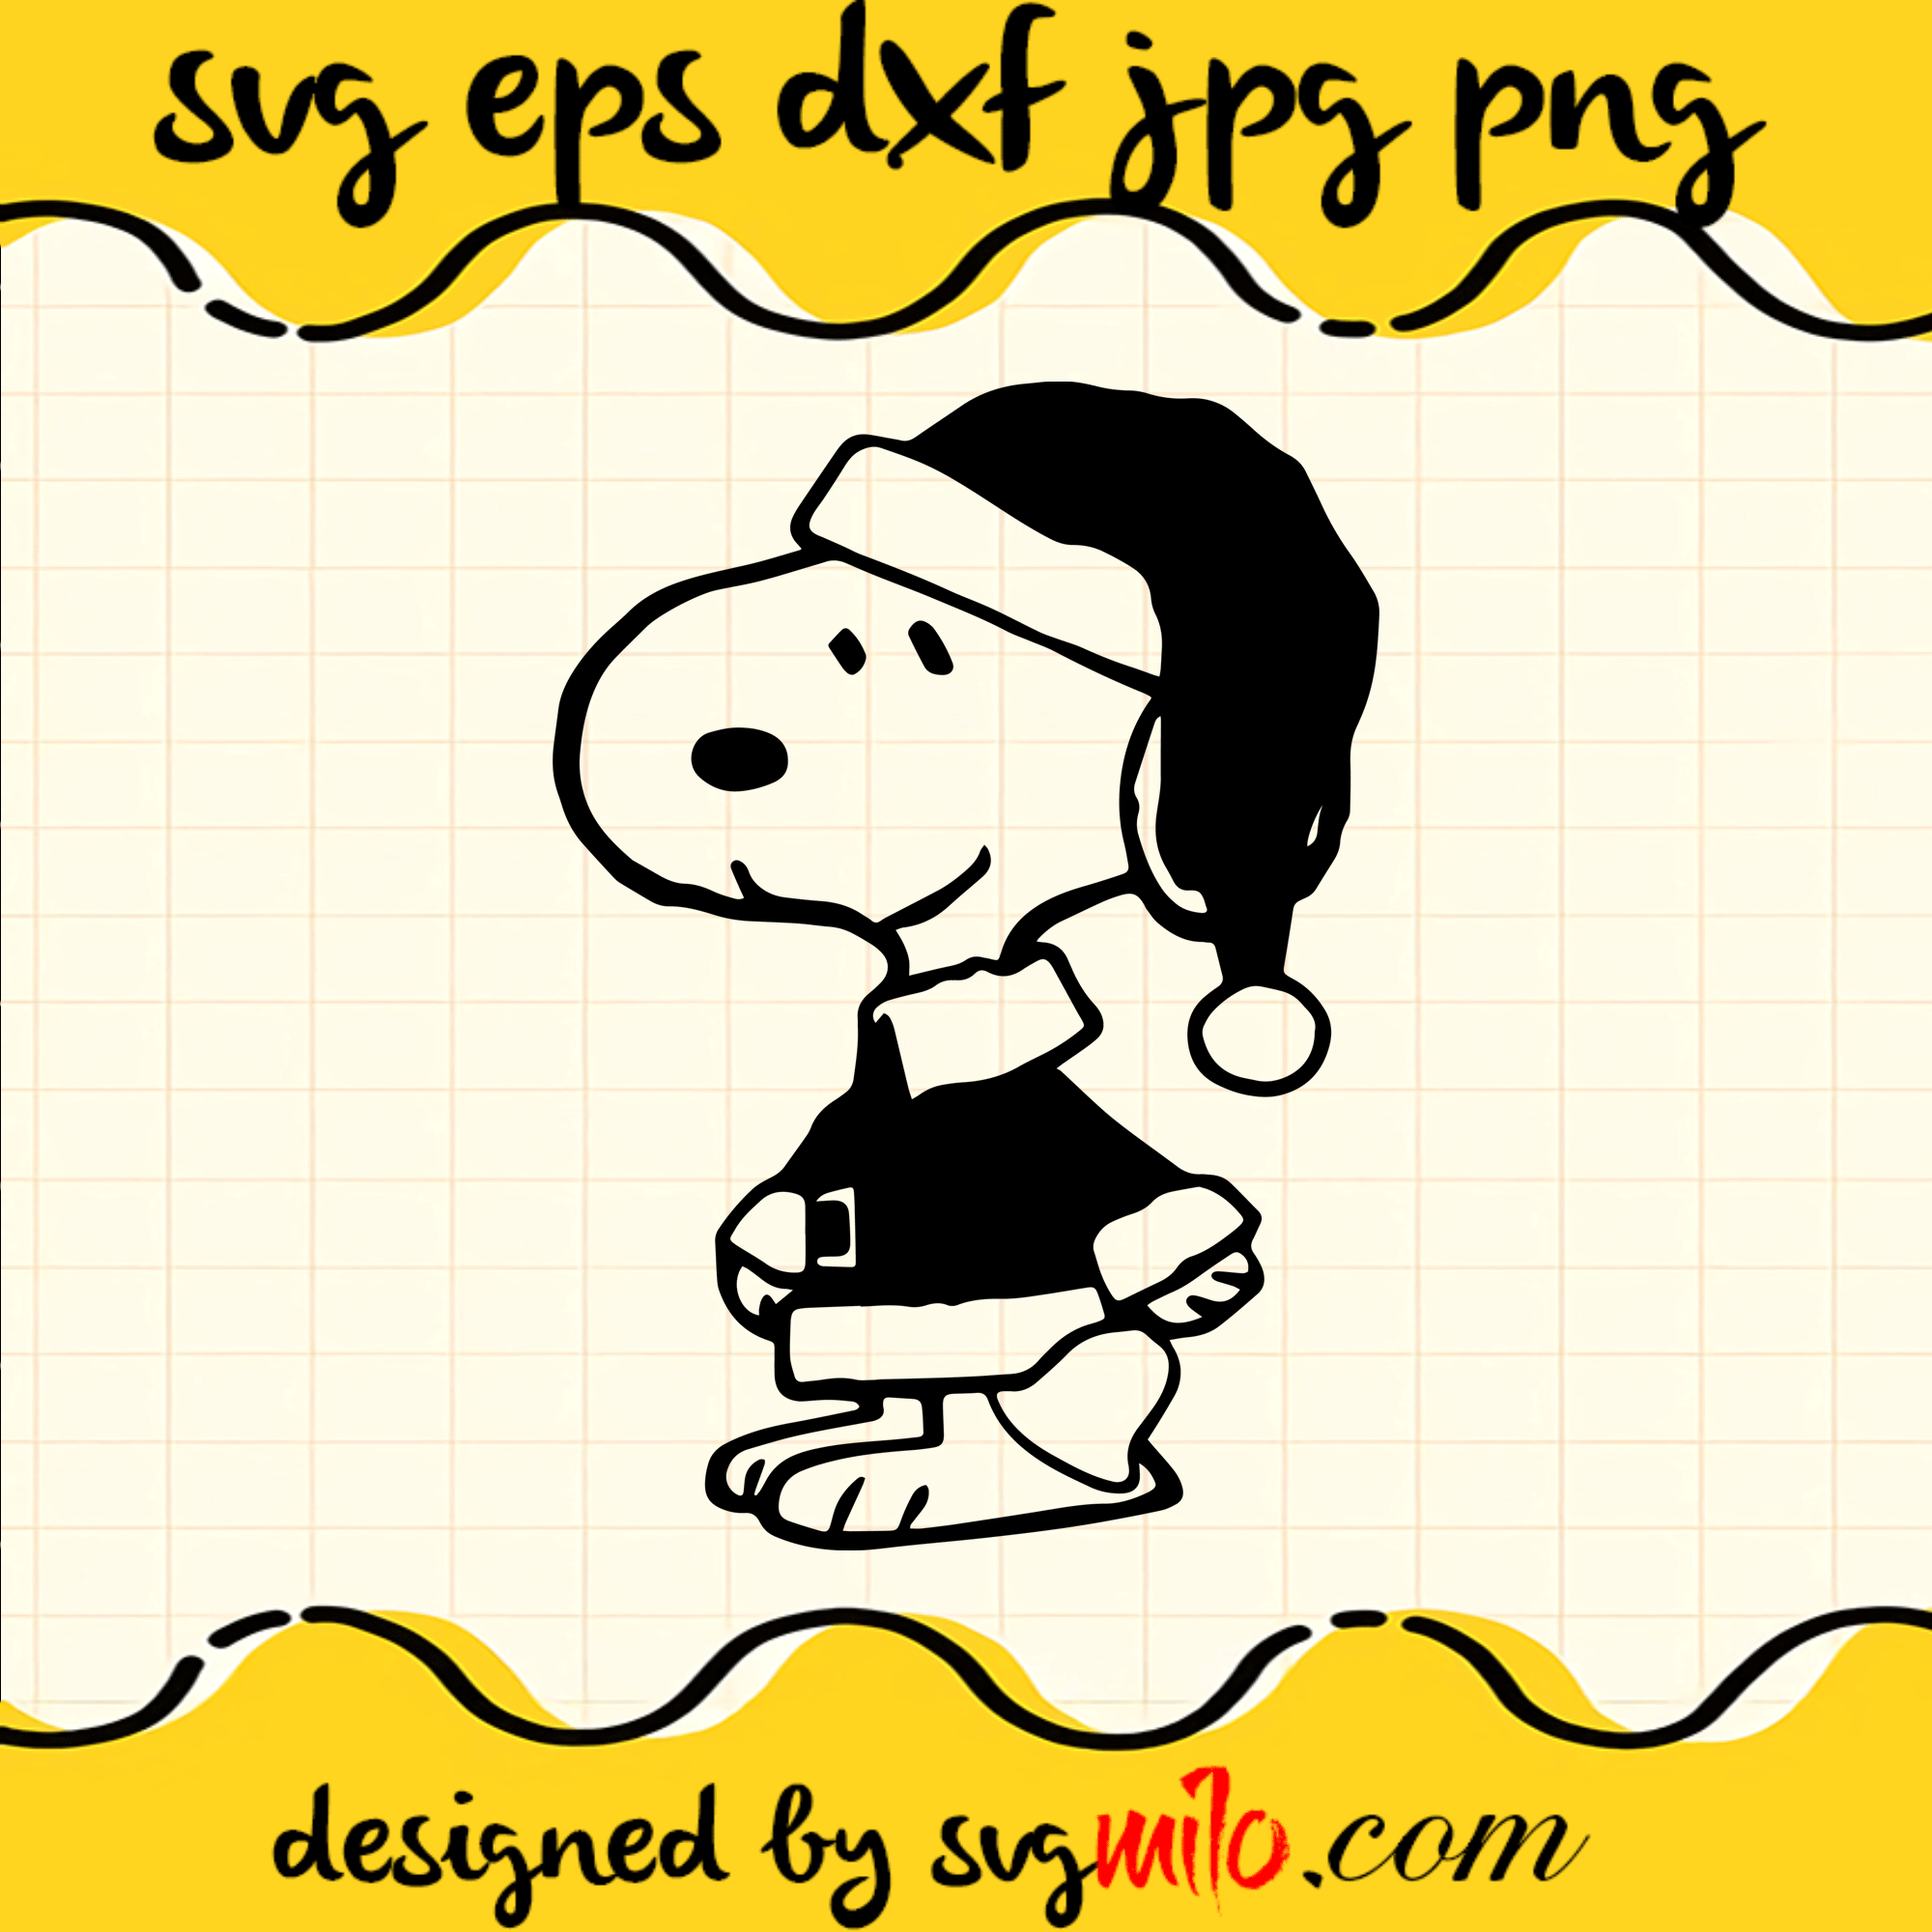 Santa Snoopy SVG, Christmas SVG, Snoopy  SVG, EPS, PNG, DXF, Premium Quality - SVGMILO